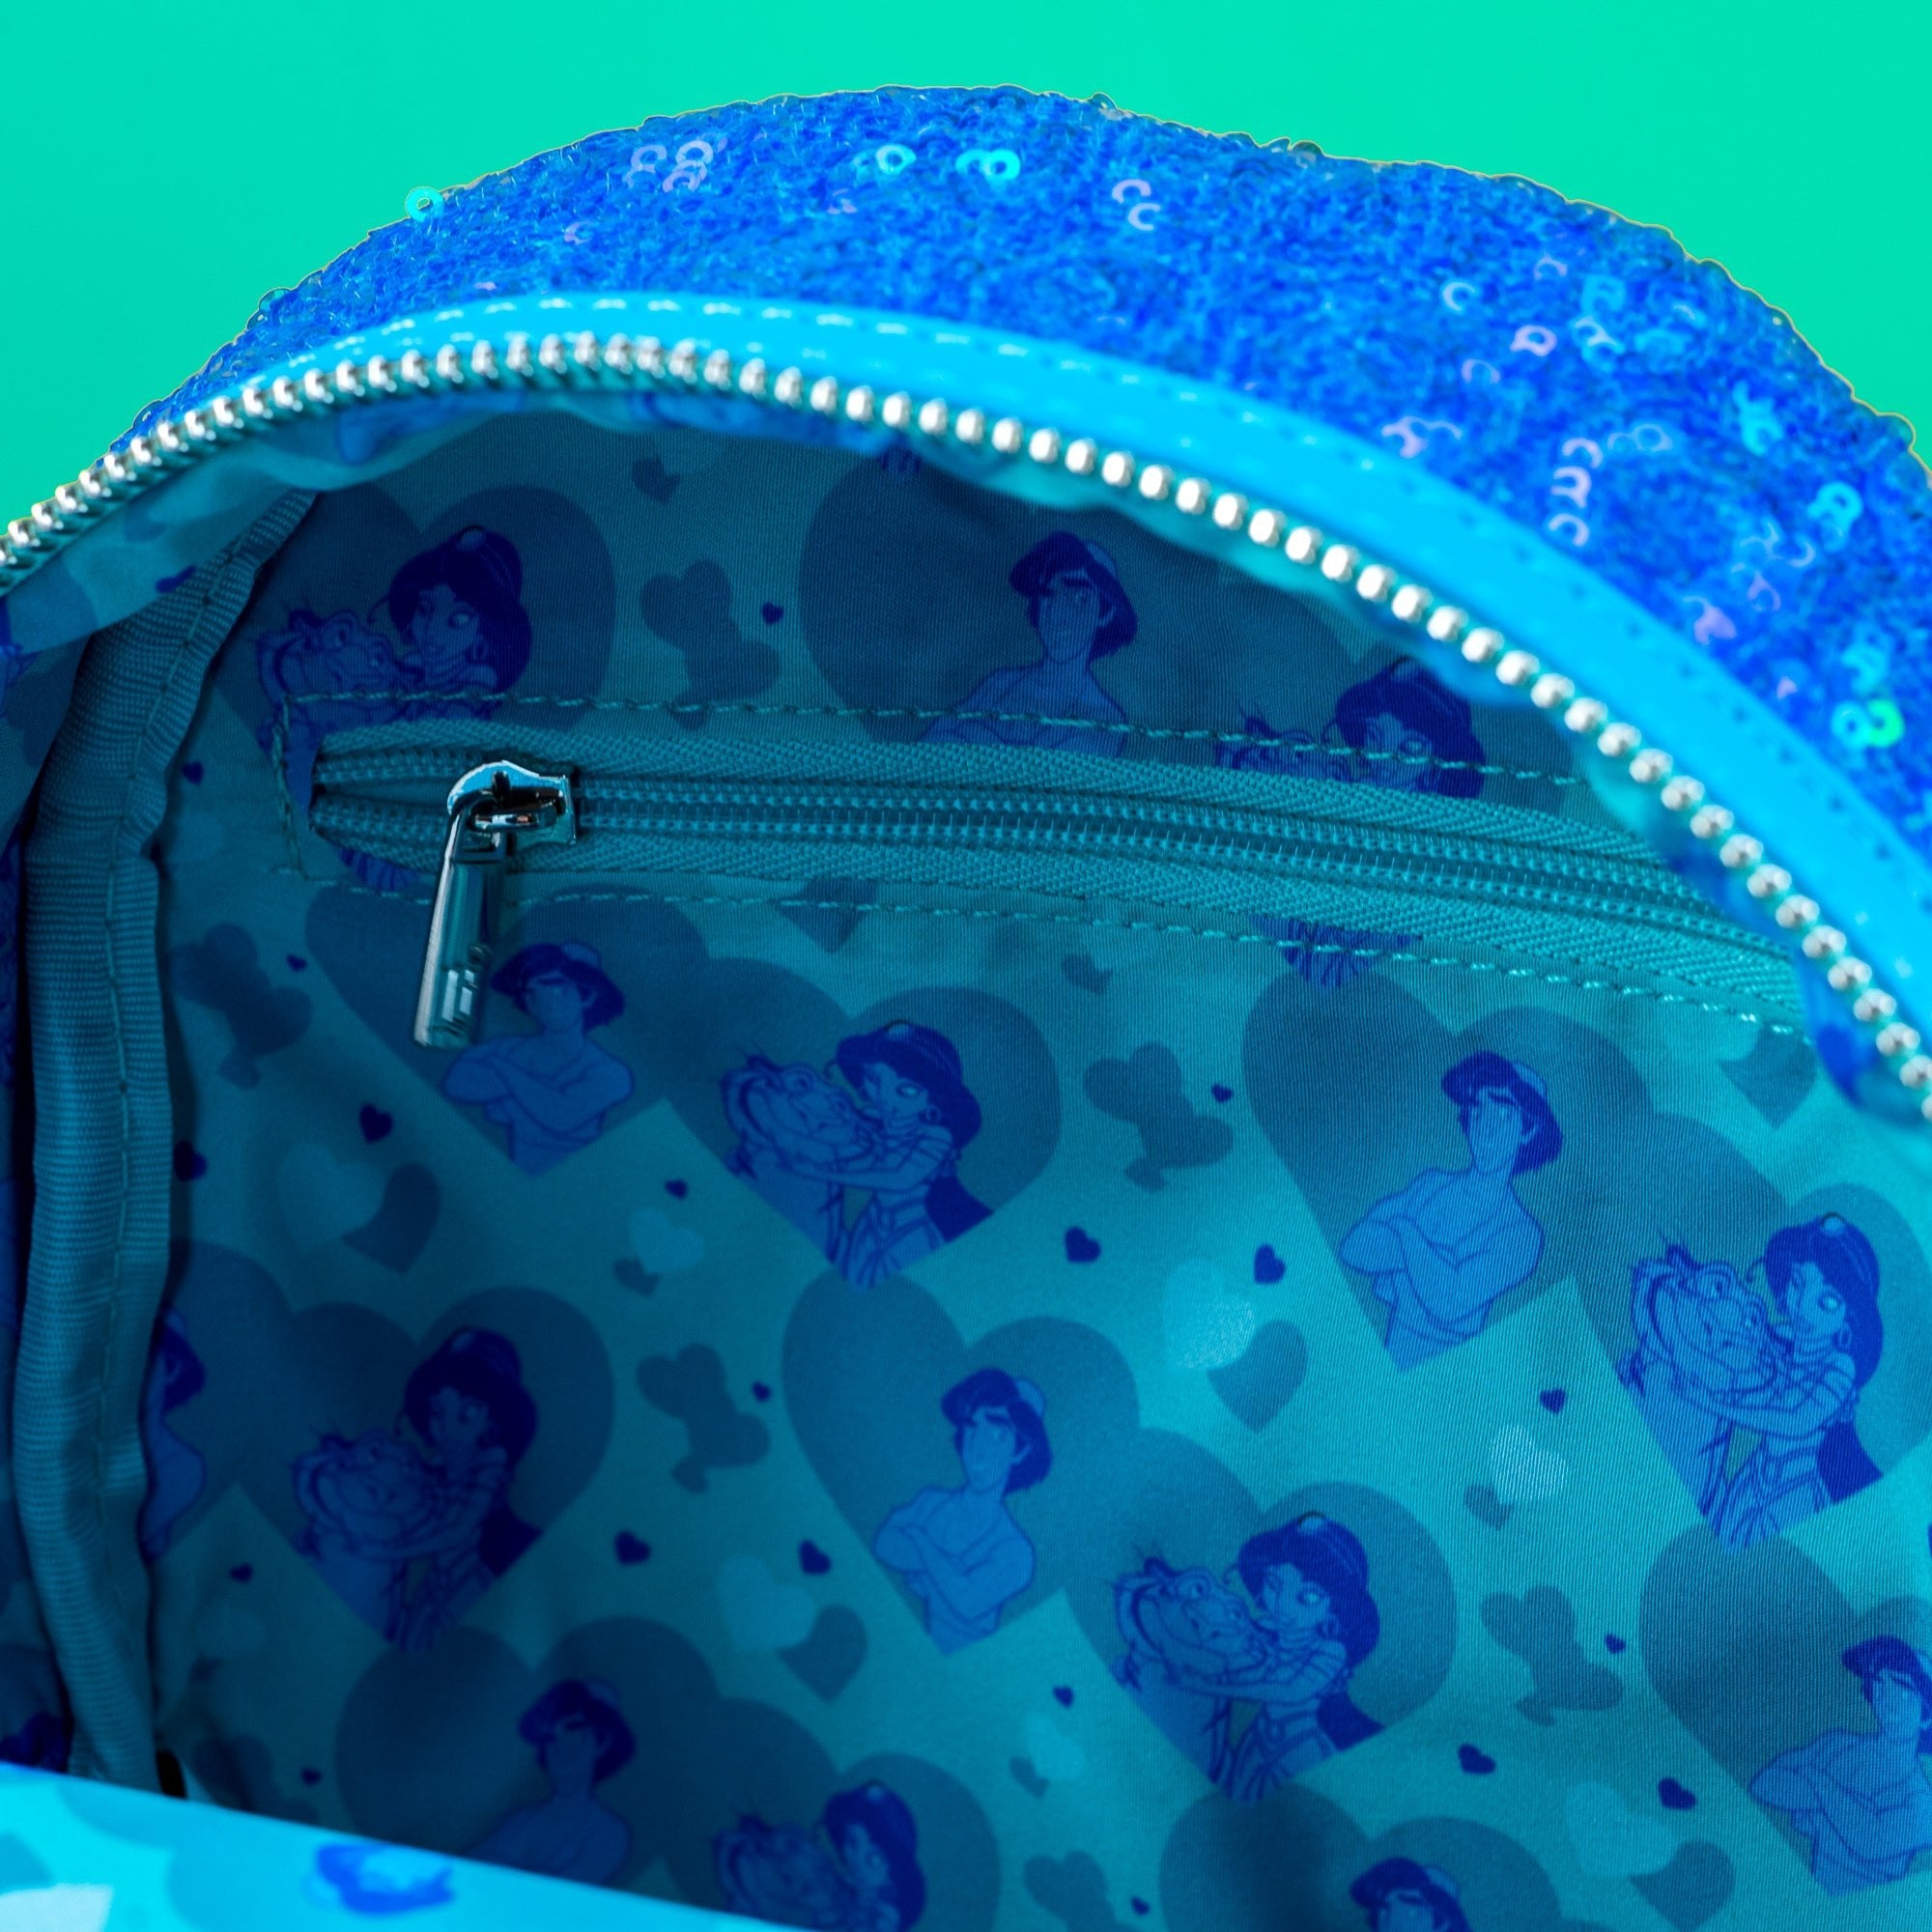 Loungefly x Disney Aladdin, Jasmine and Rajah Blue Sequin Mini Backpack - GeekCore